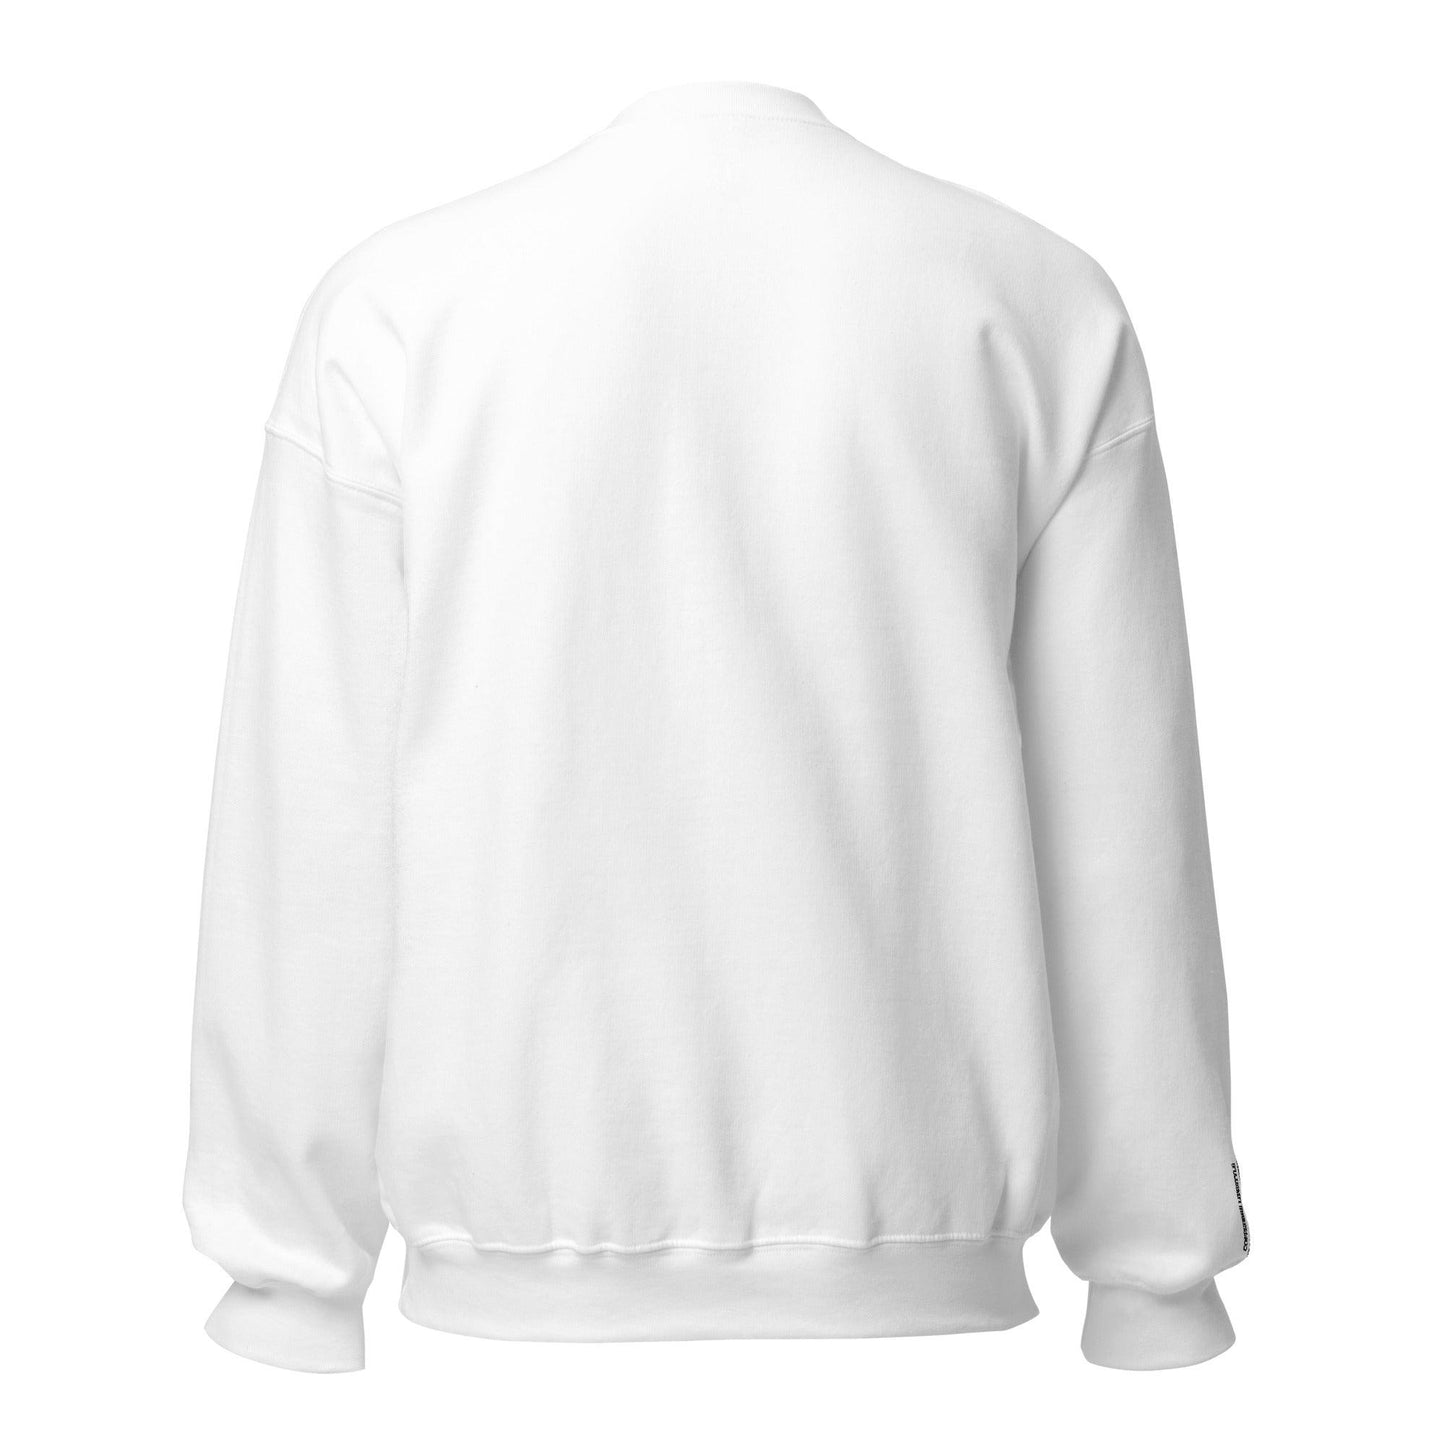 Trendy Unisex Embroidery Sweatshirt - COFFEEBRE